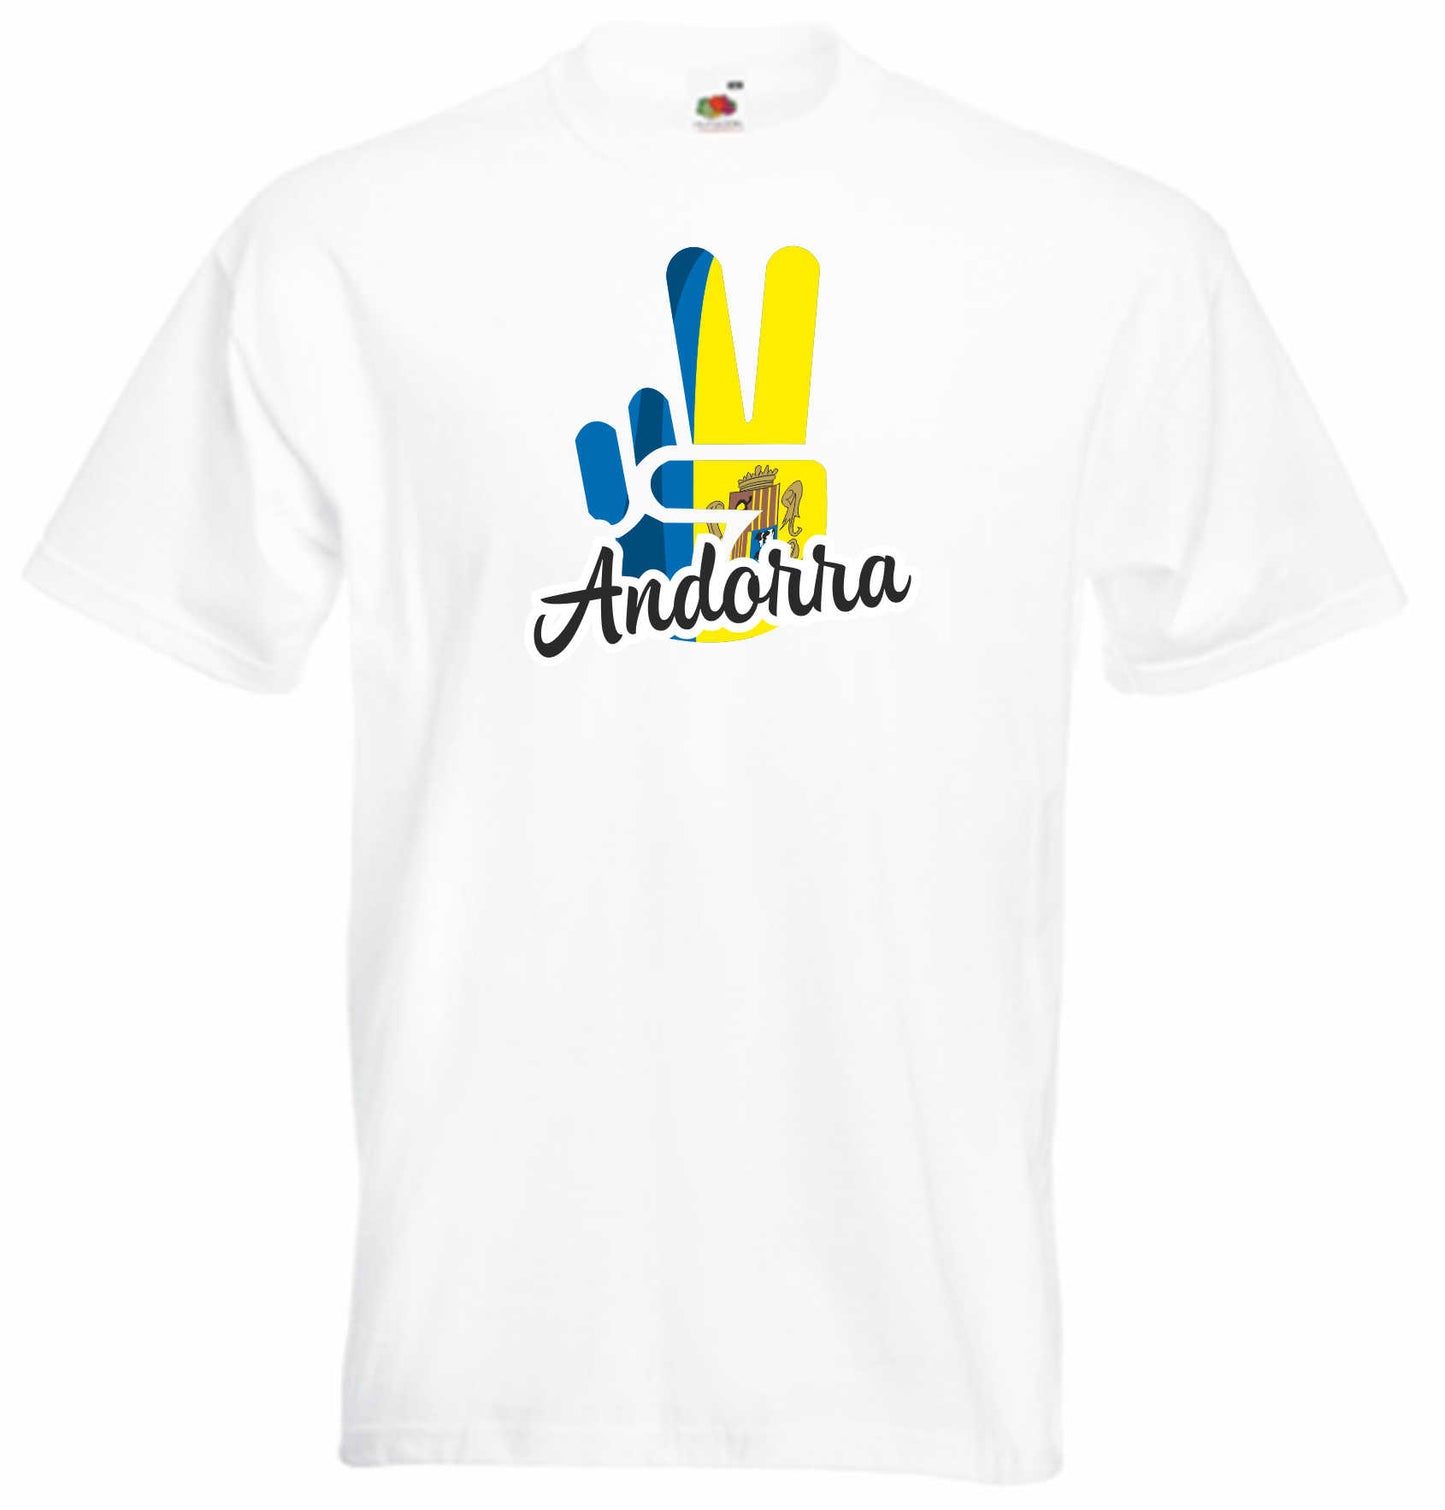 T-Shirt Herren - Victory - Flagge / Fahne - Andorra - Sieg